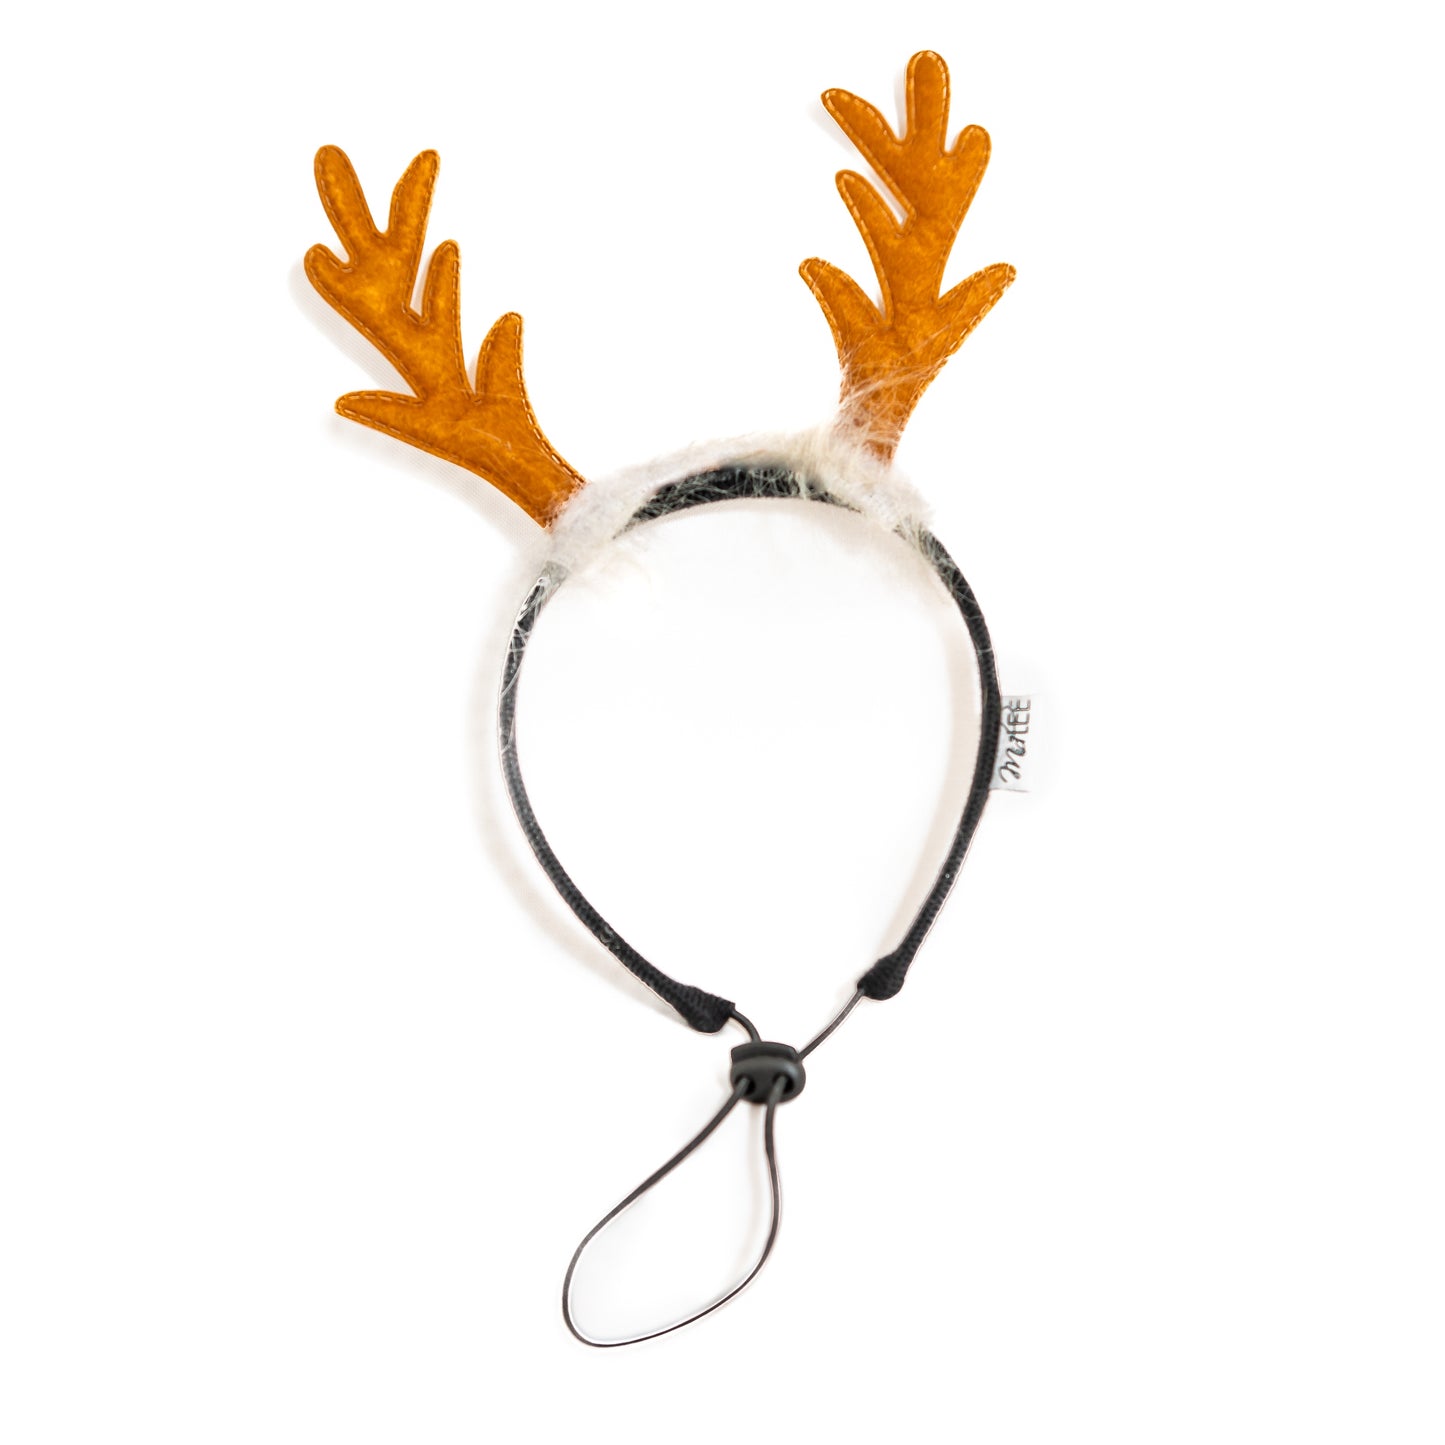 Midlee Furry Antlers Headband Dog Costume